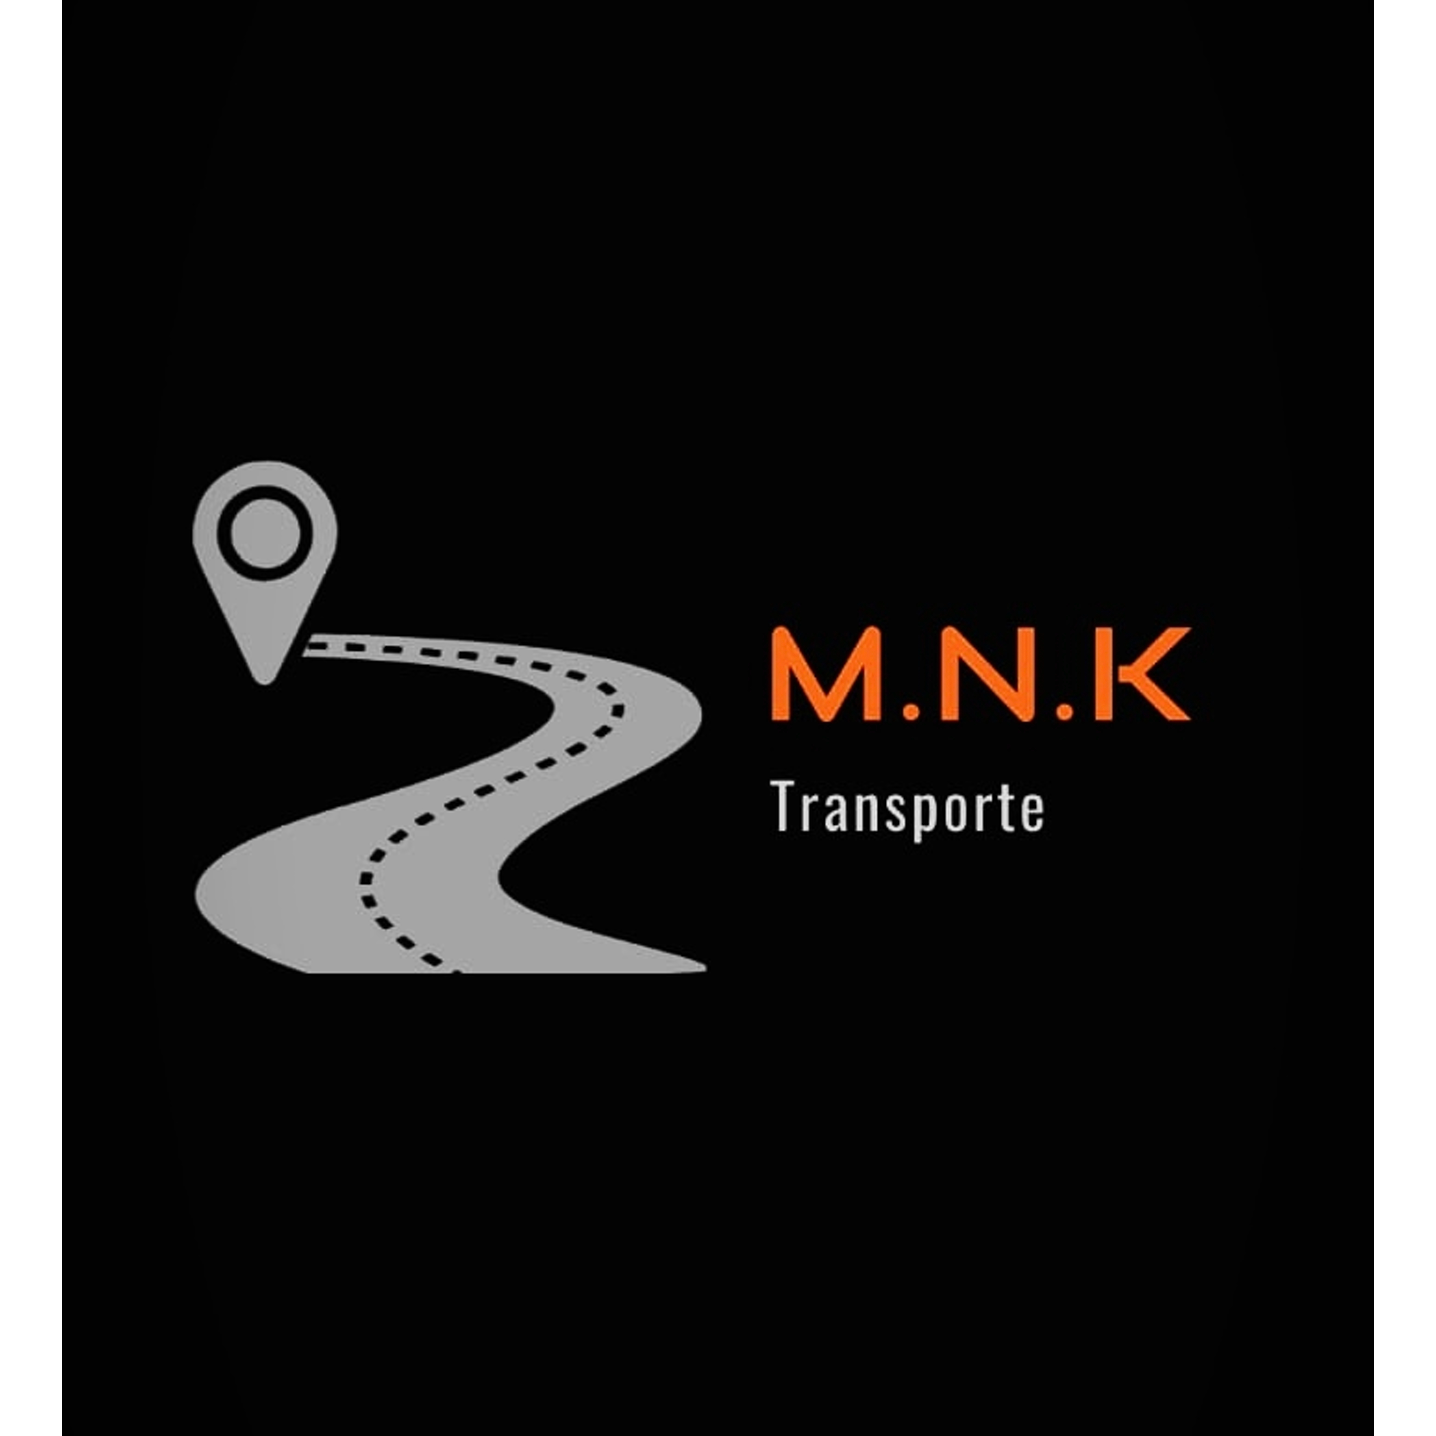 M.N.K Transporte Logo